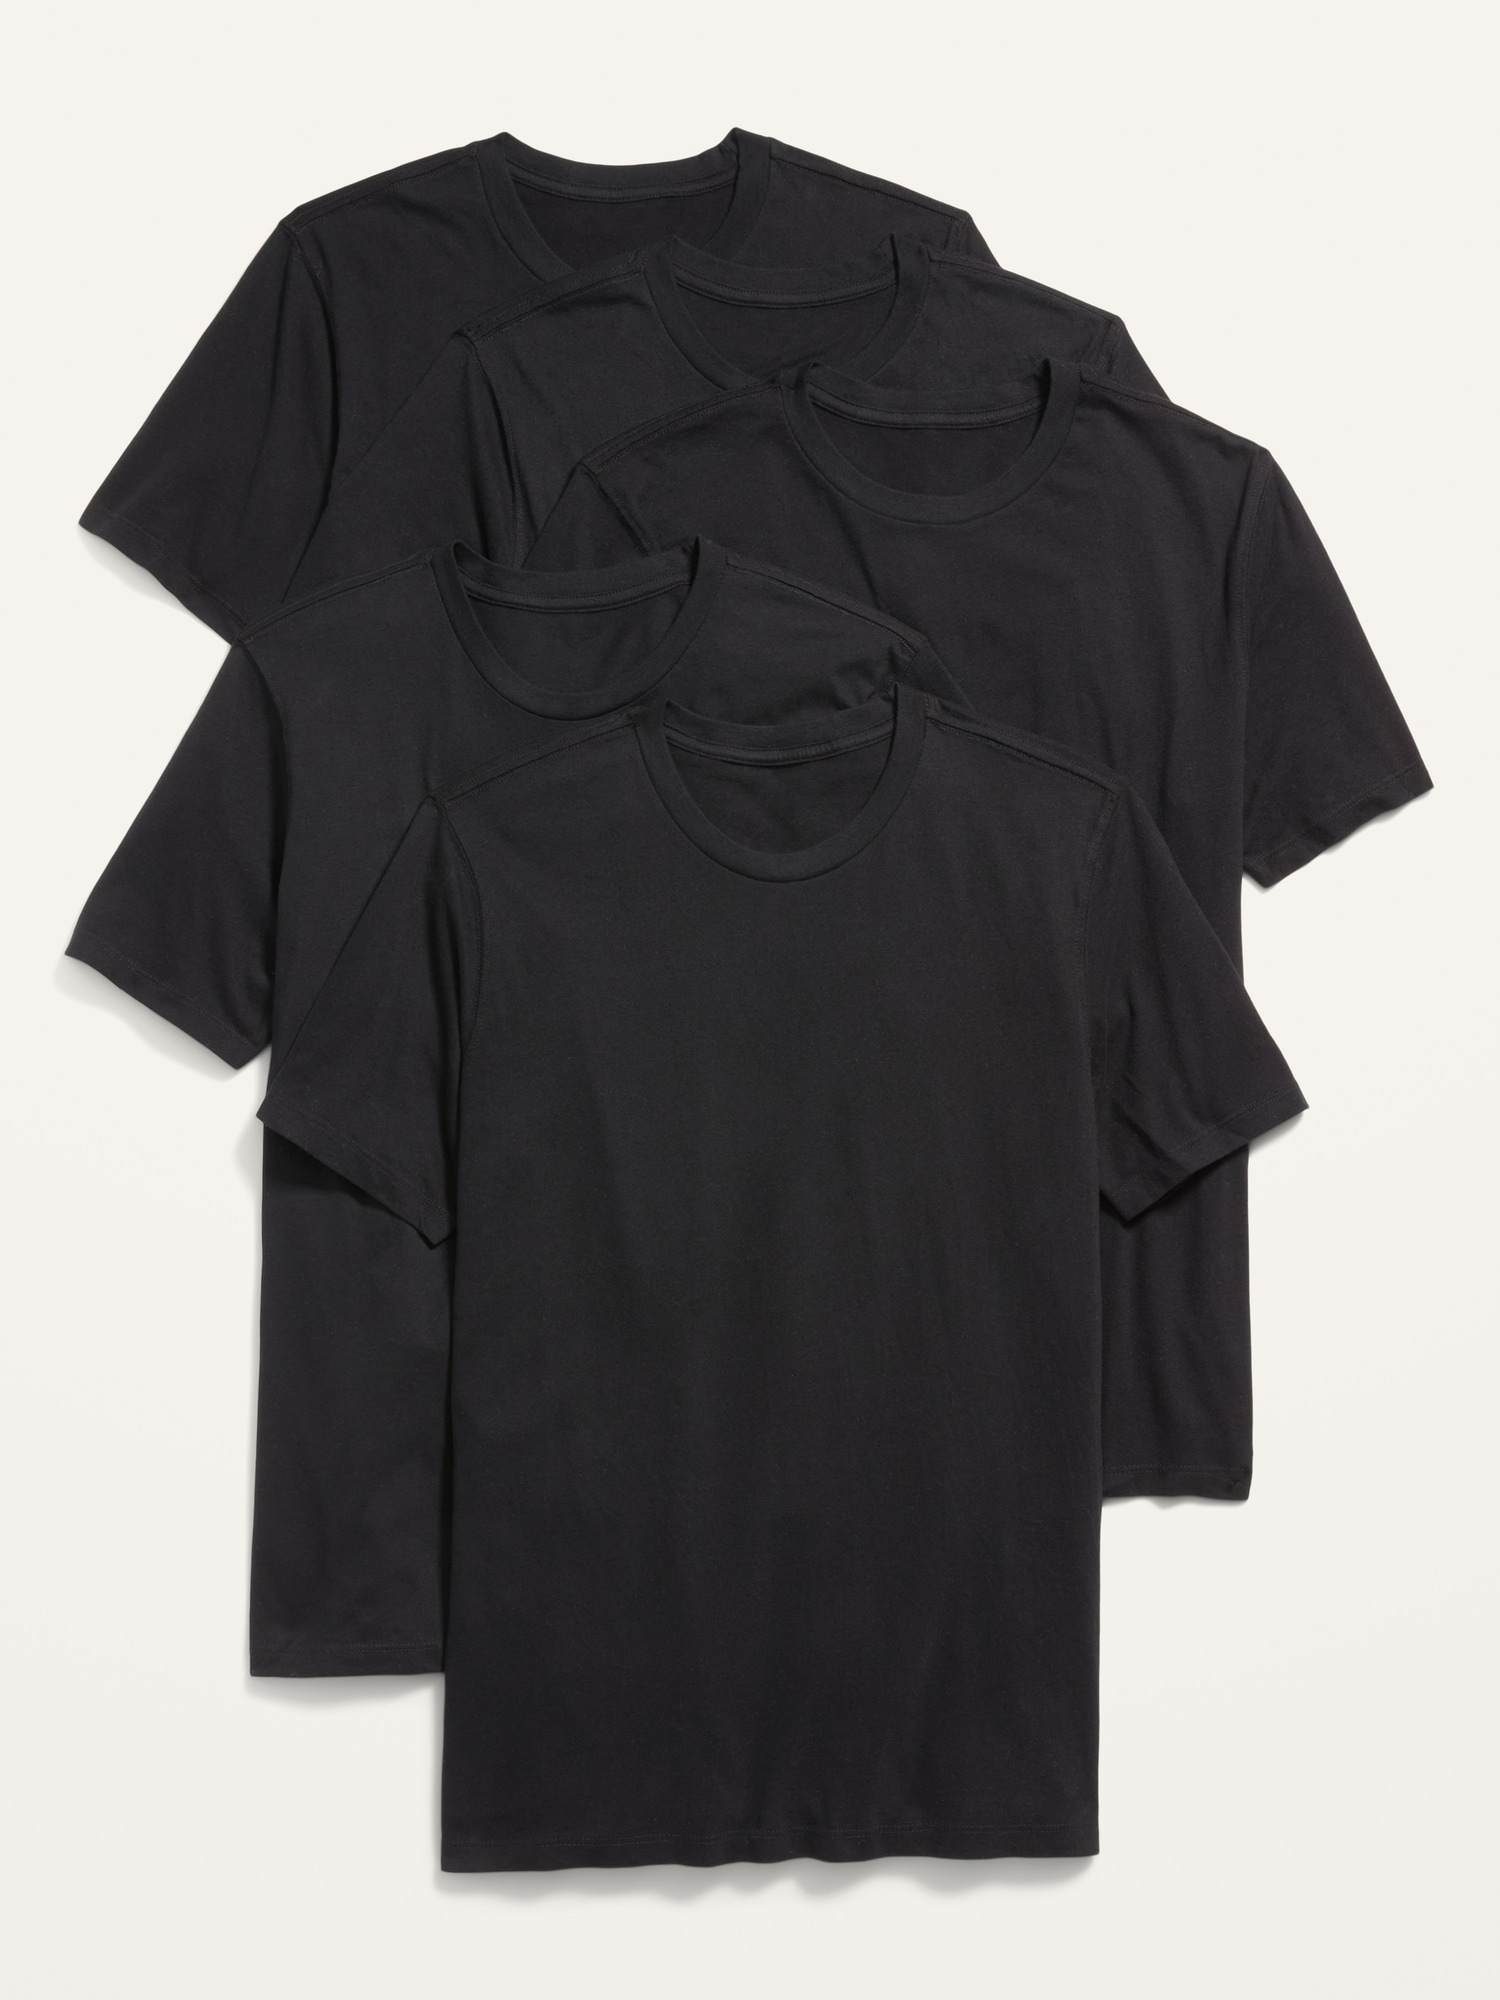 Old Navy Soft-Washed Crew-Neck T-Shirt 5-Pack black. 1